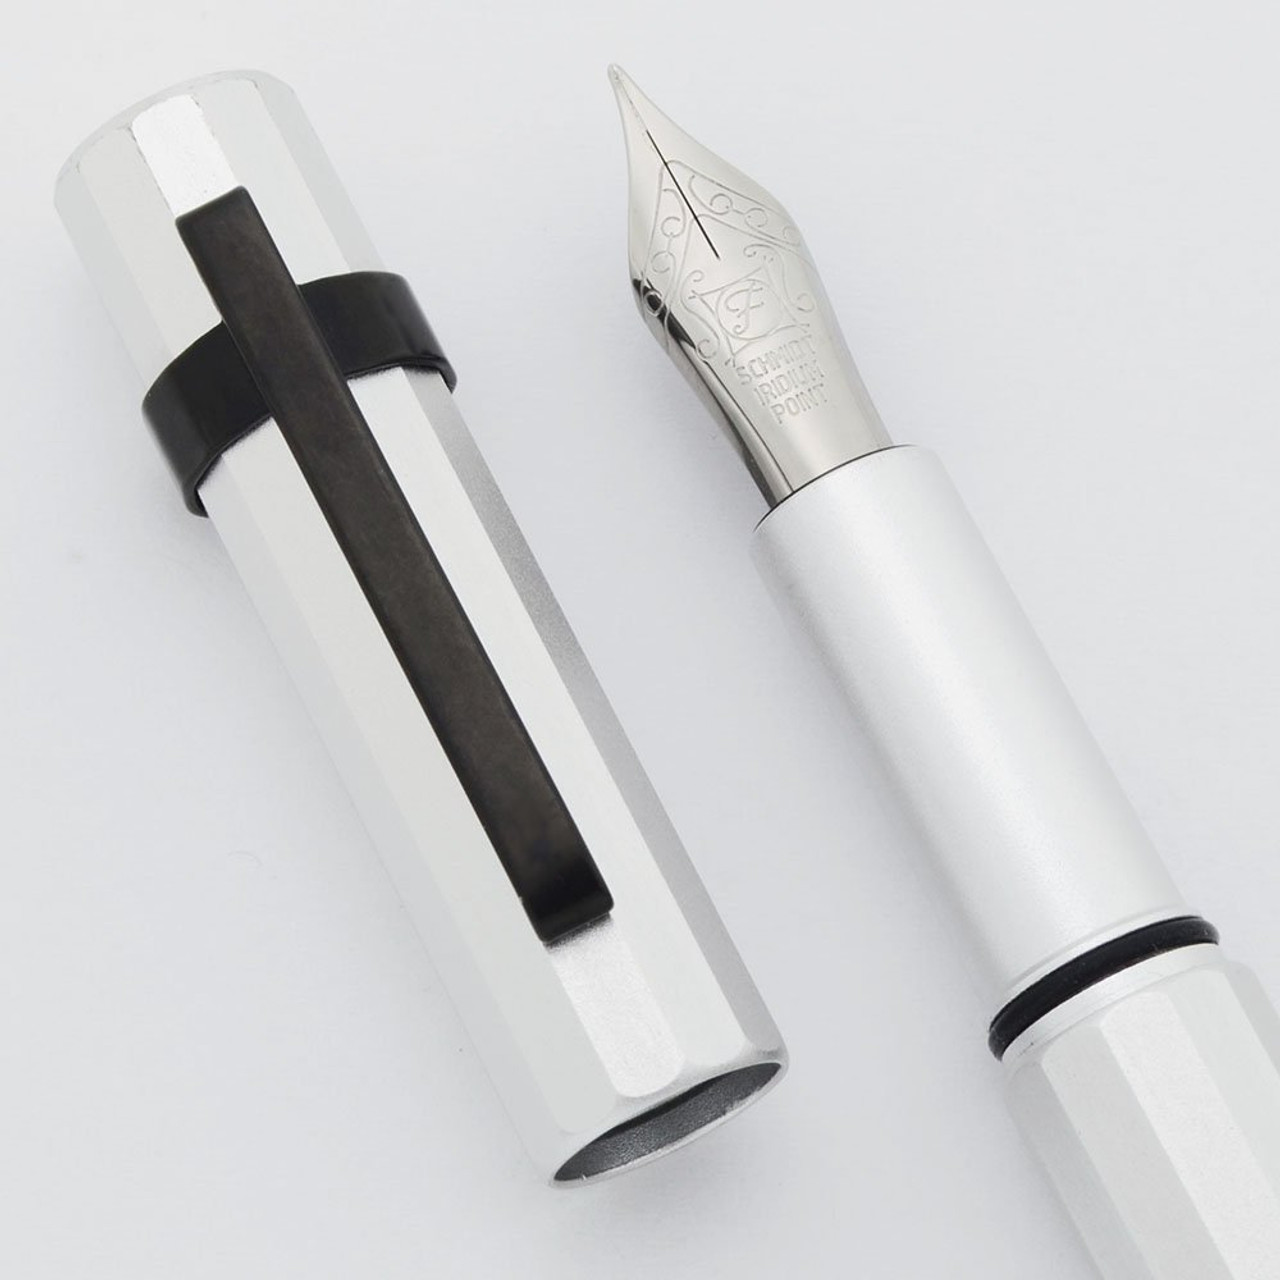 Ensso XS Minimalist Pocket Fountain Pen - Silver Aluminum, Fine Nib (Like New in Box, Works Well)